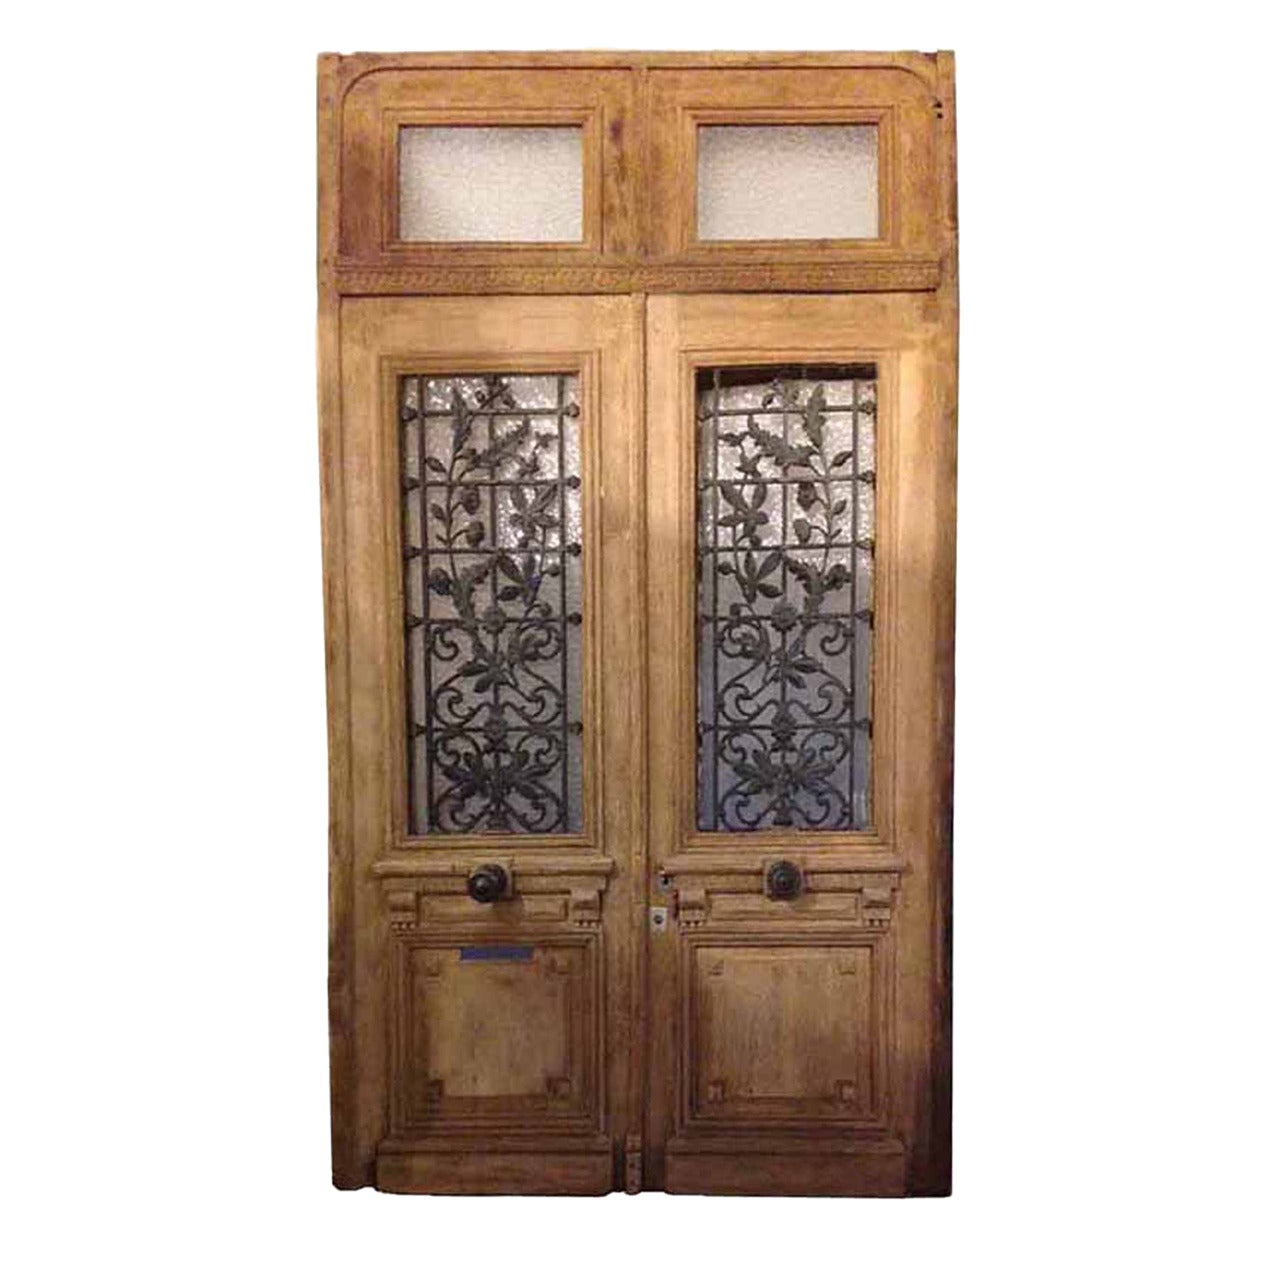 Circa 1820 Double Door with Transom